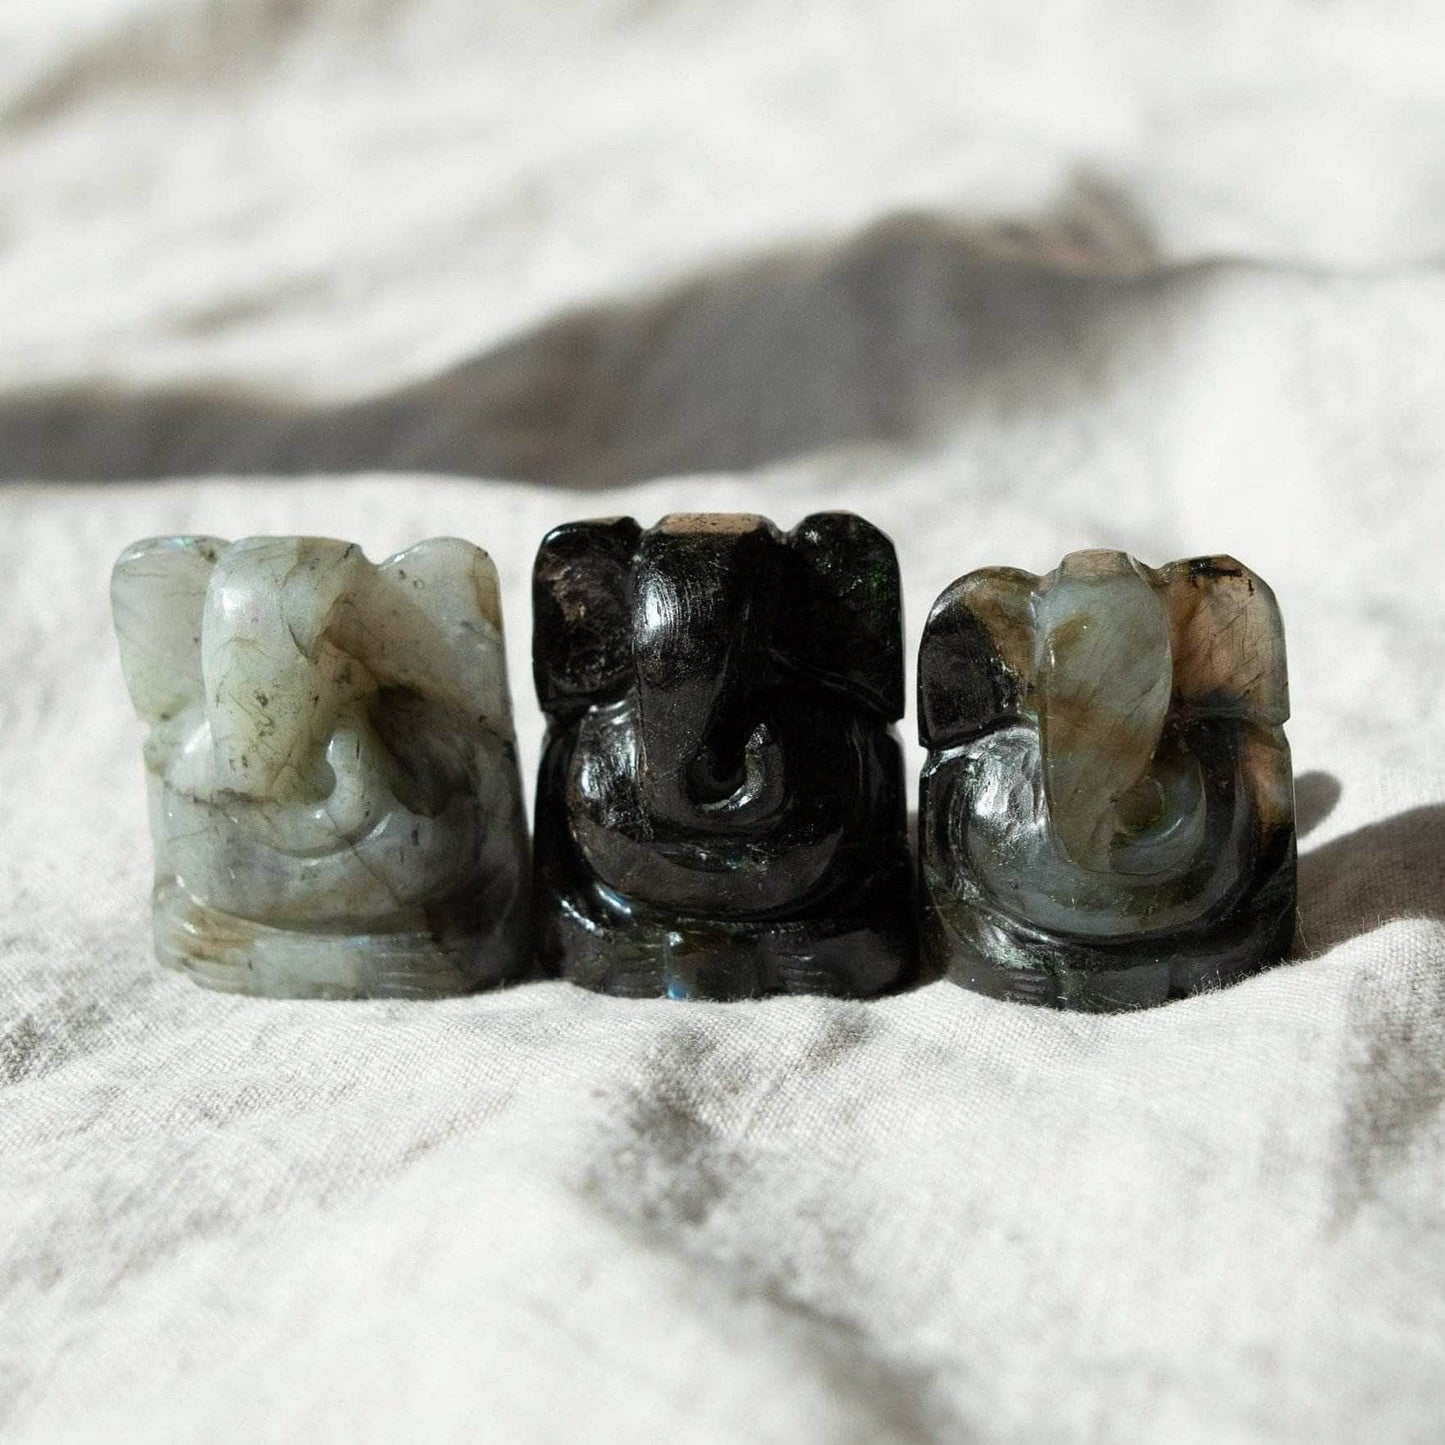 Labradorite Ganesh by Tiny Rituals